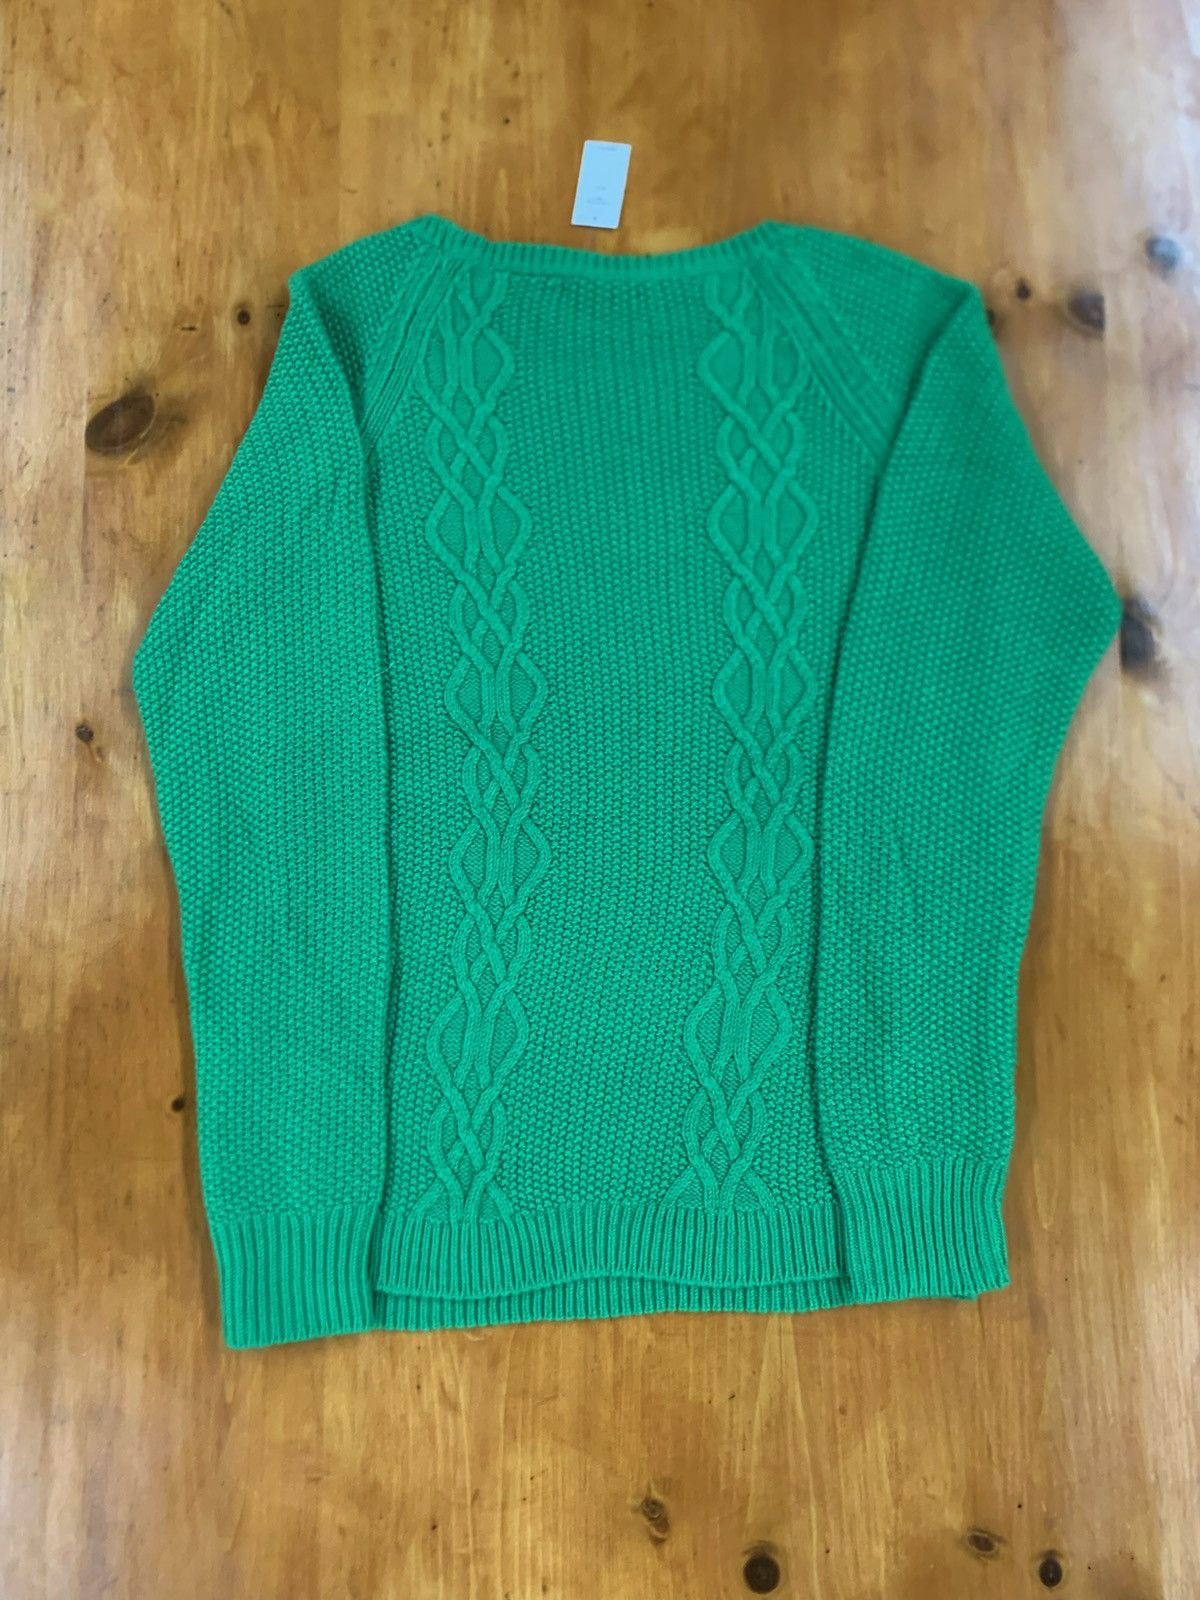 Vintage Gap Green Tendril Vines Knit Sweater Size US L / EU 52-54 / 3 - 3 Preview